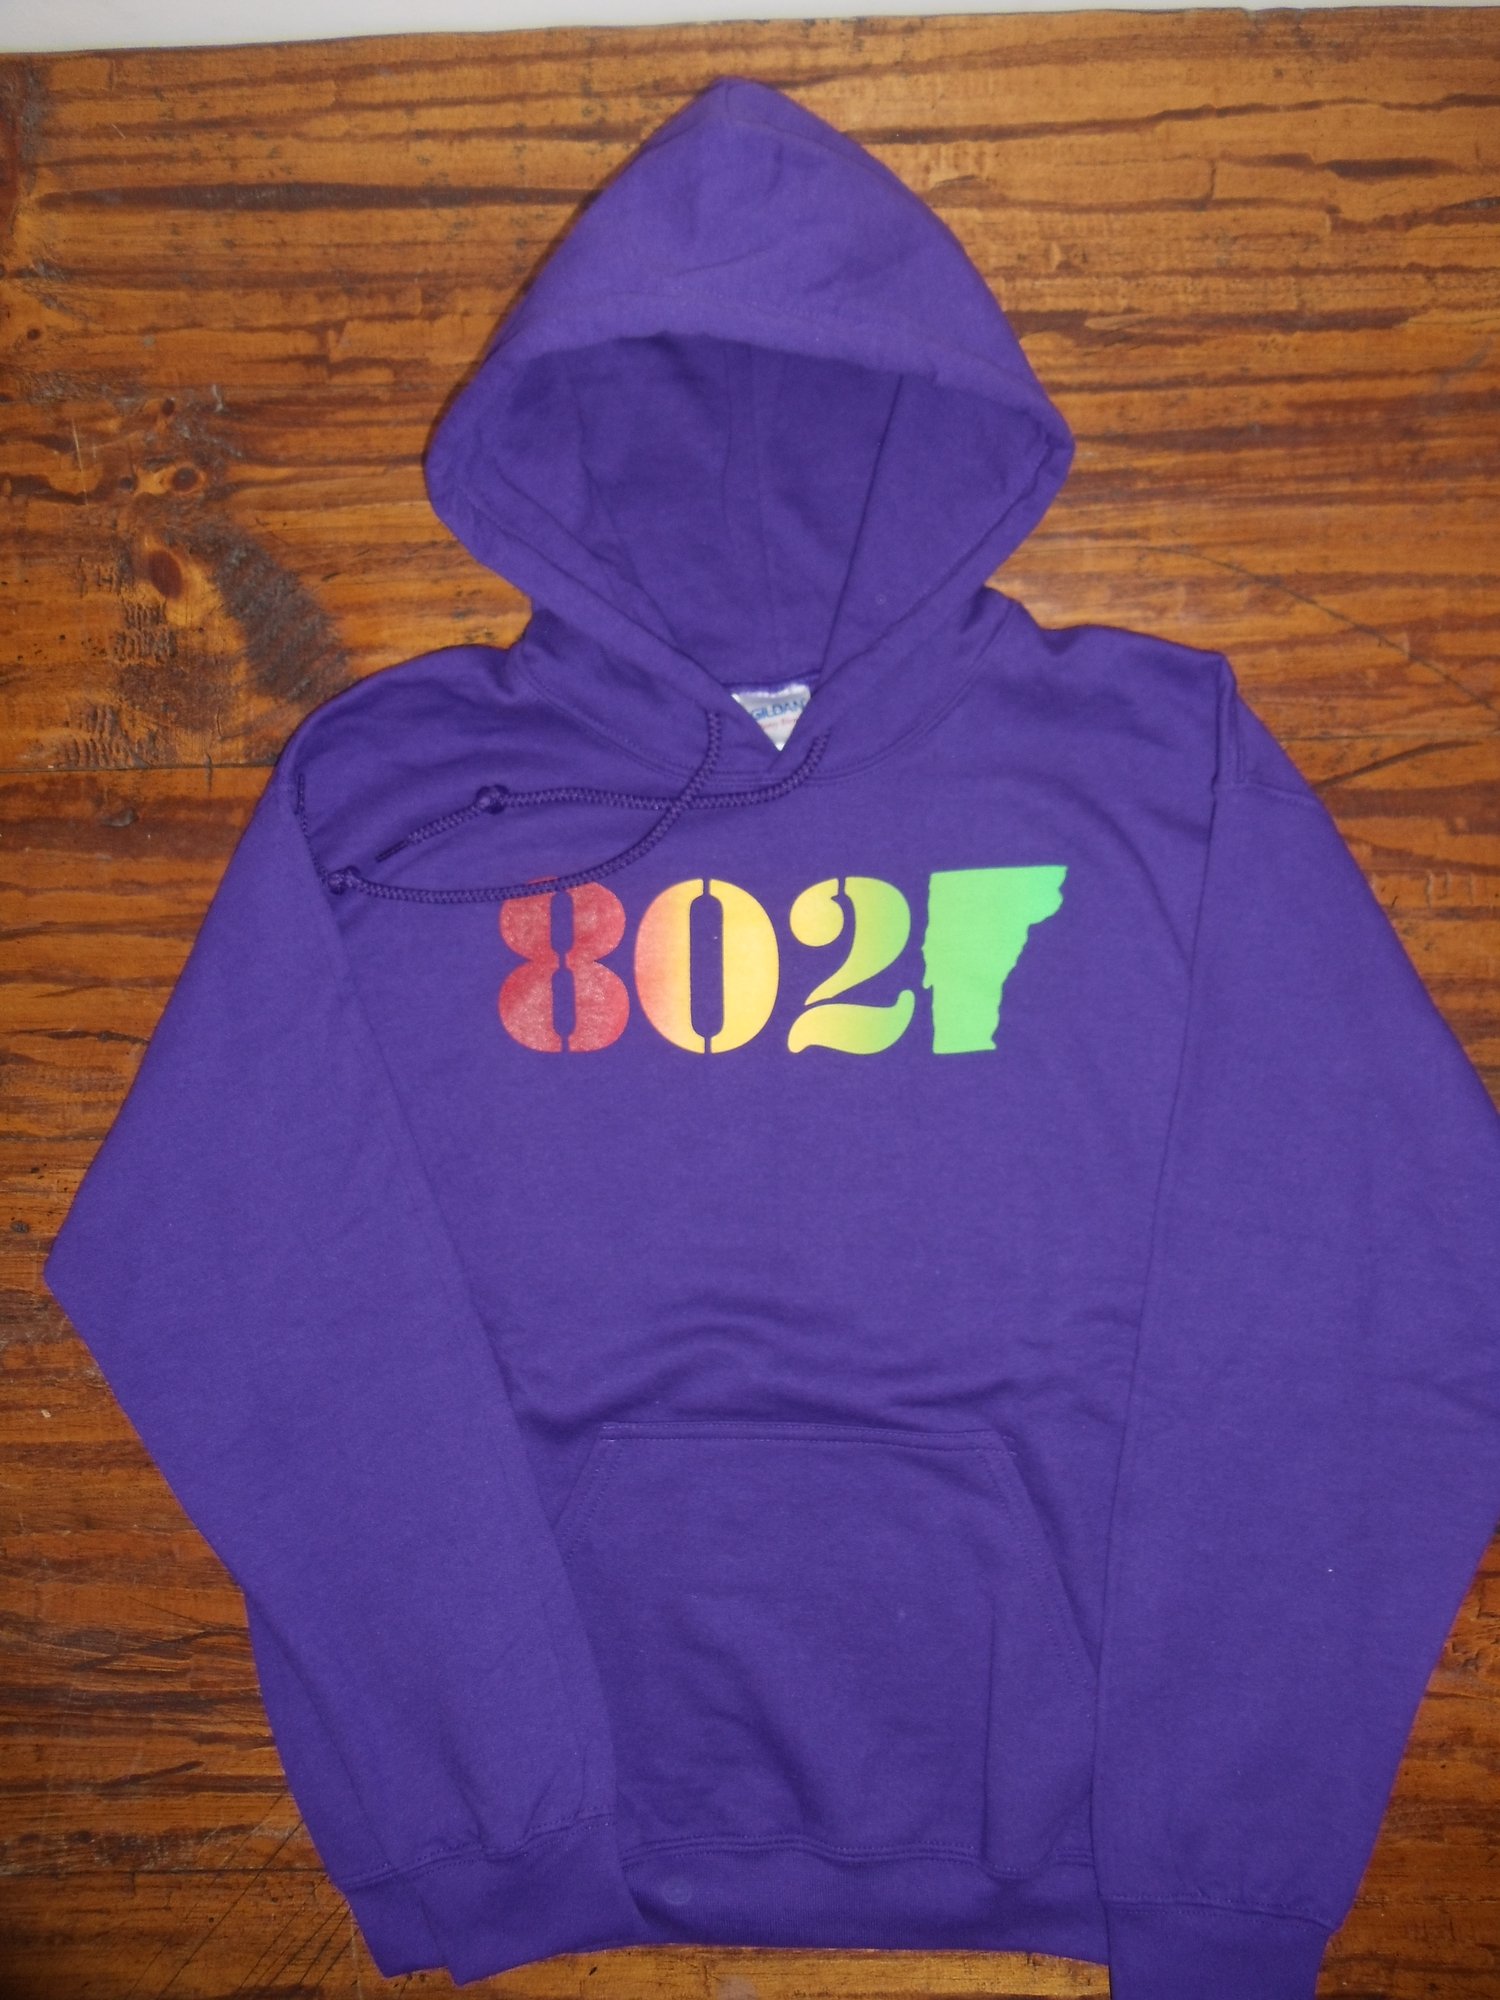 Image of 802 Classic Vermont Hooded Sweatshirt - Red, orange, yellow, green (Rasta) 802 logo on Purple Hoodie